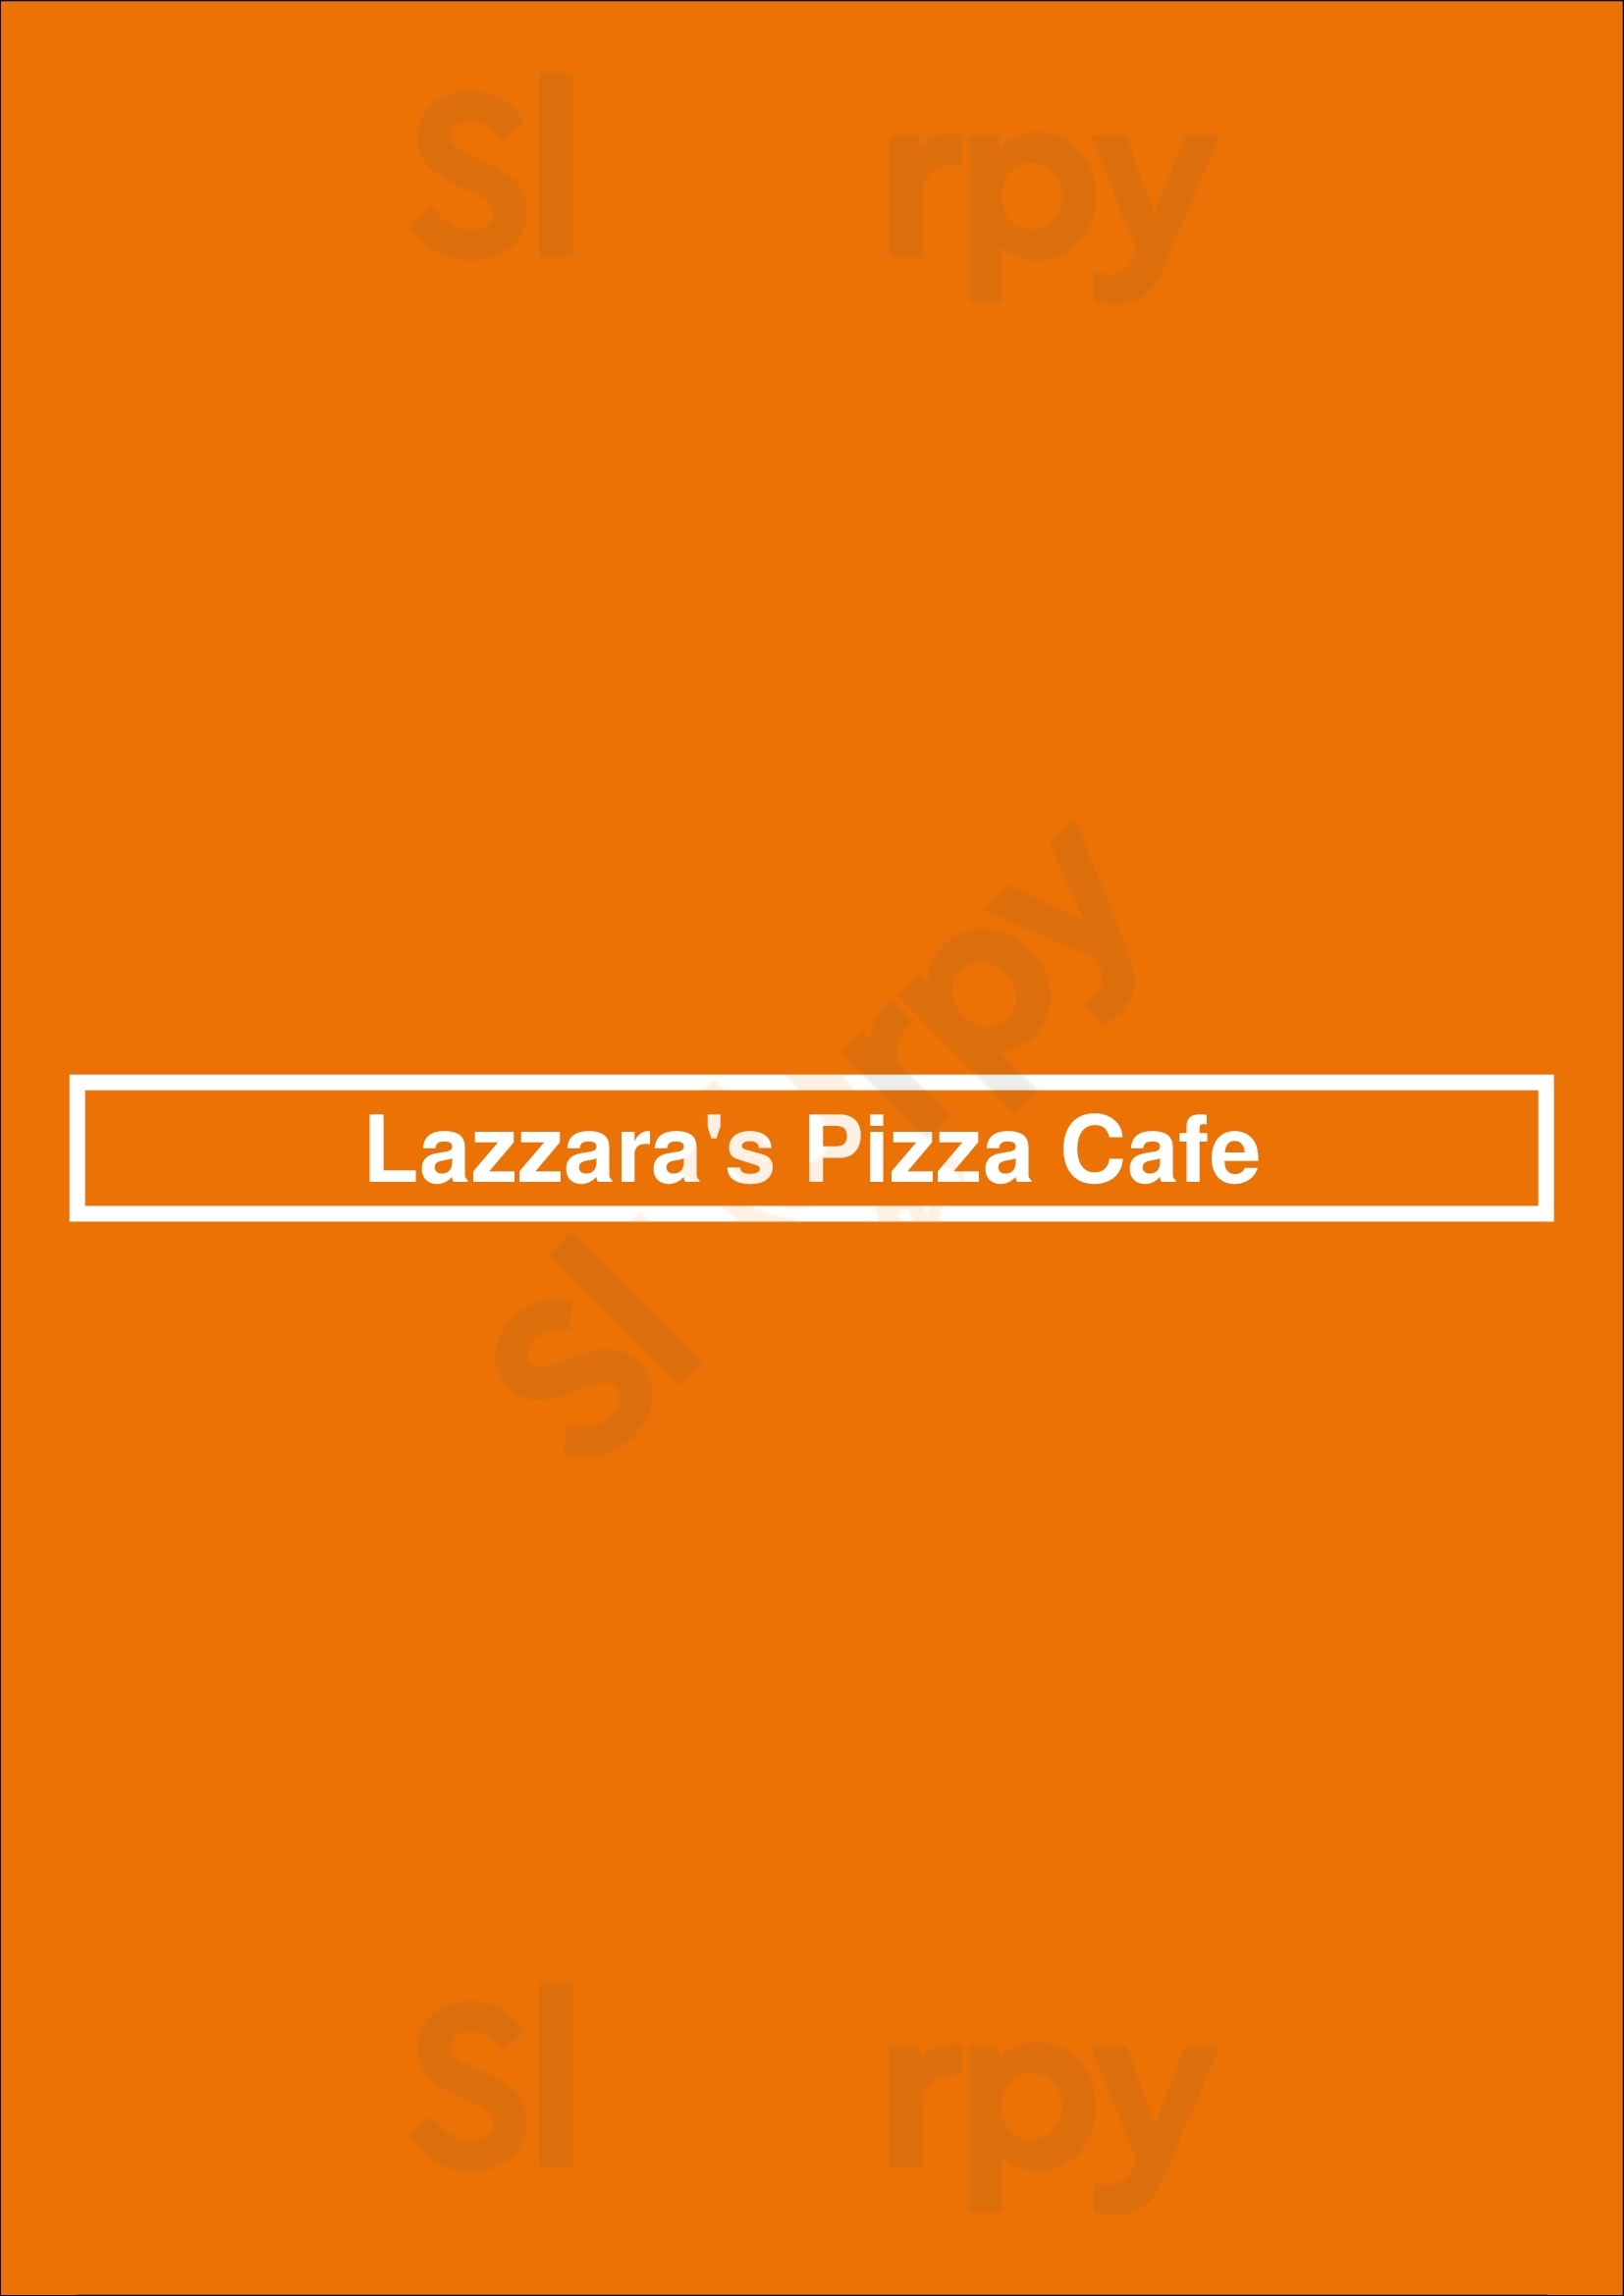 Lazzara's Pizza Cafe New York City Menu - 1